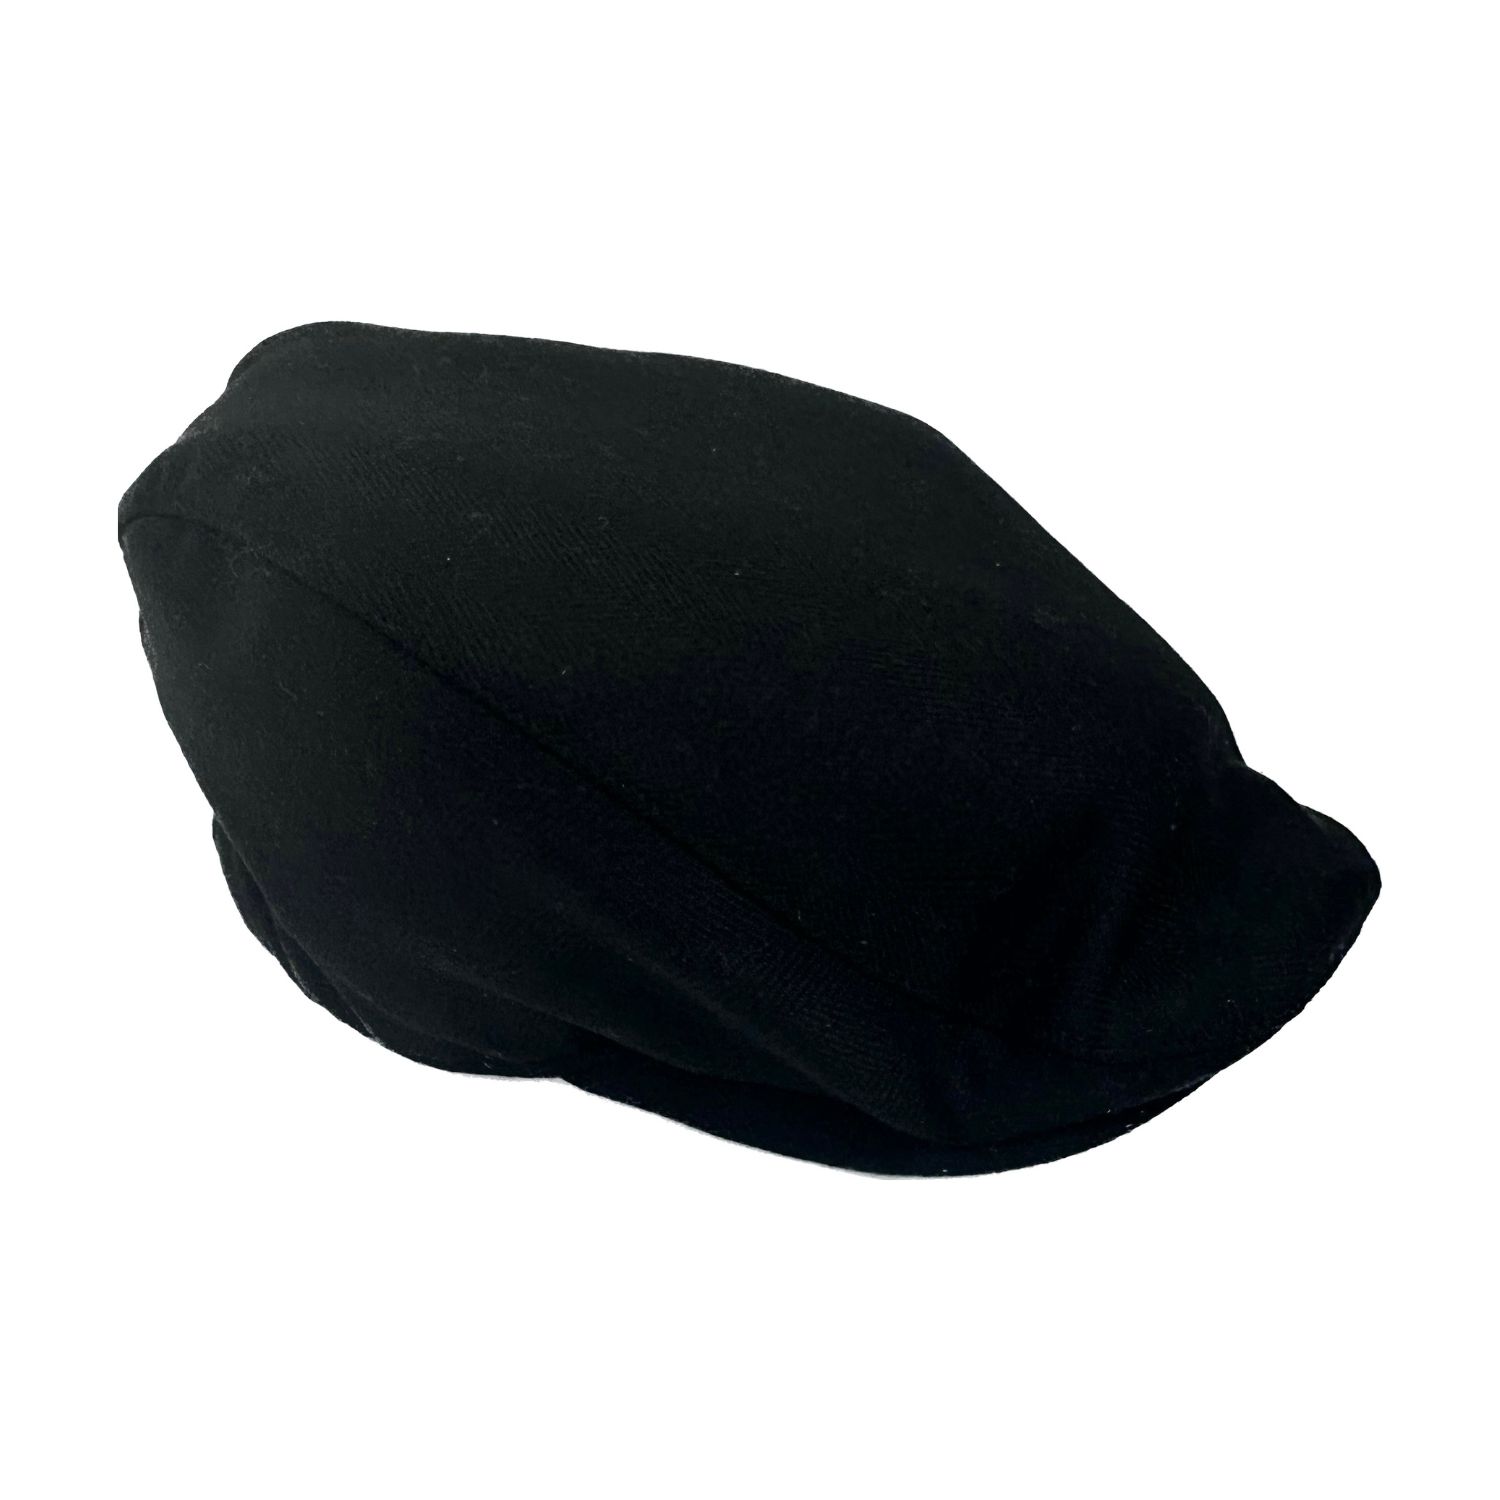 Black Cashmere Flat Cap